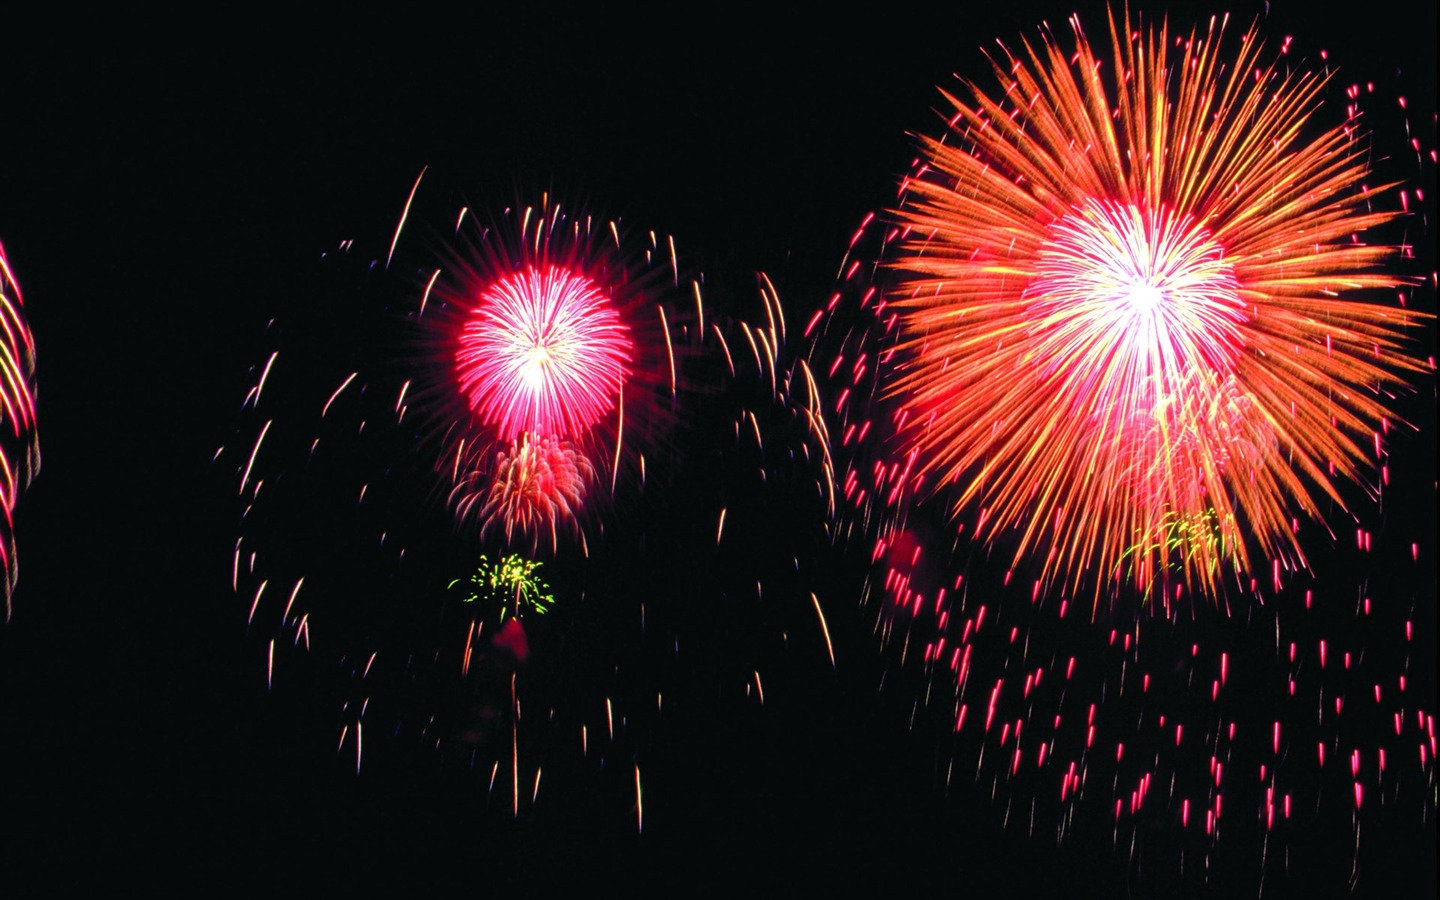 Festival fireworks display wallpaper #40 - 1440x900